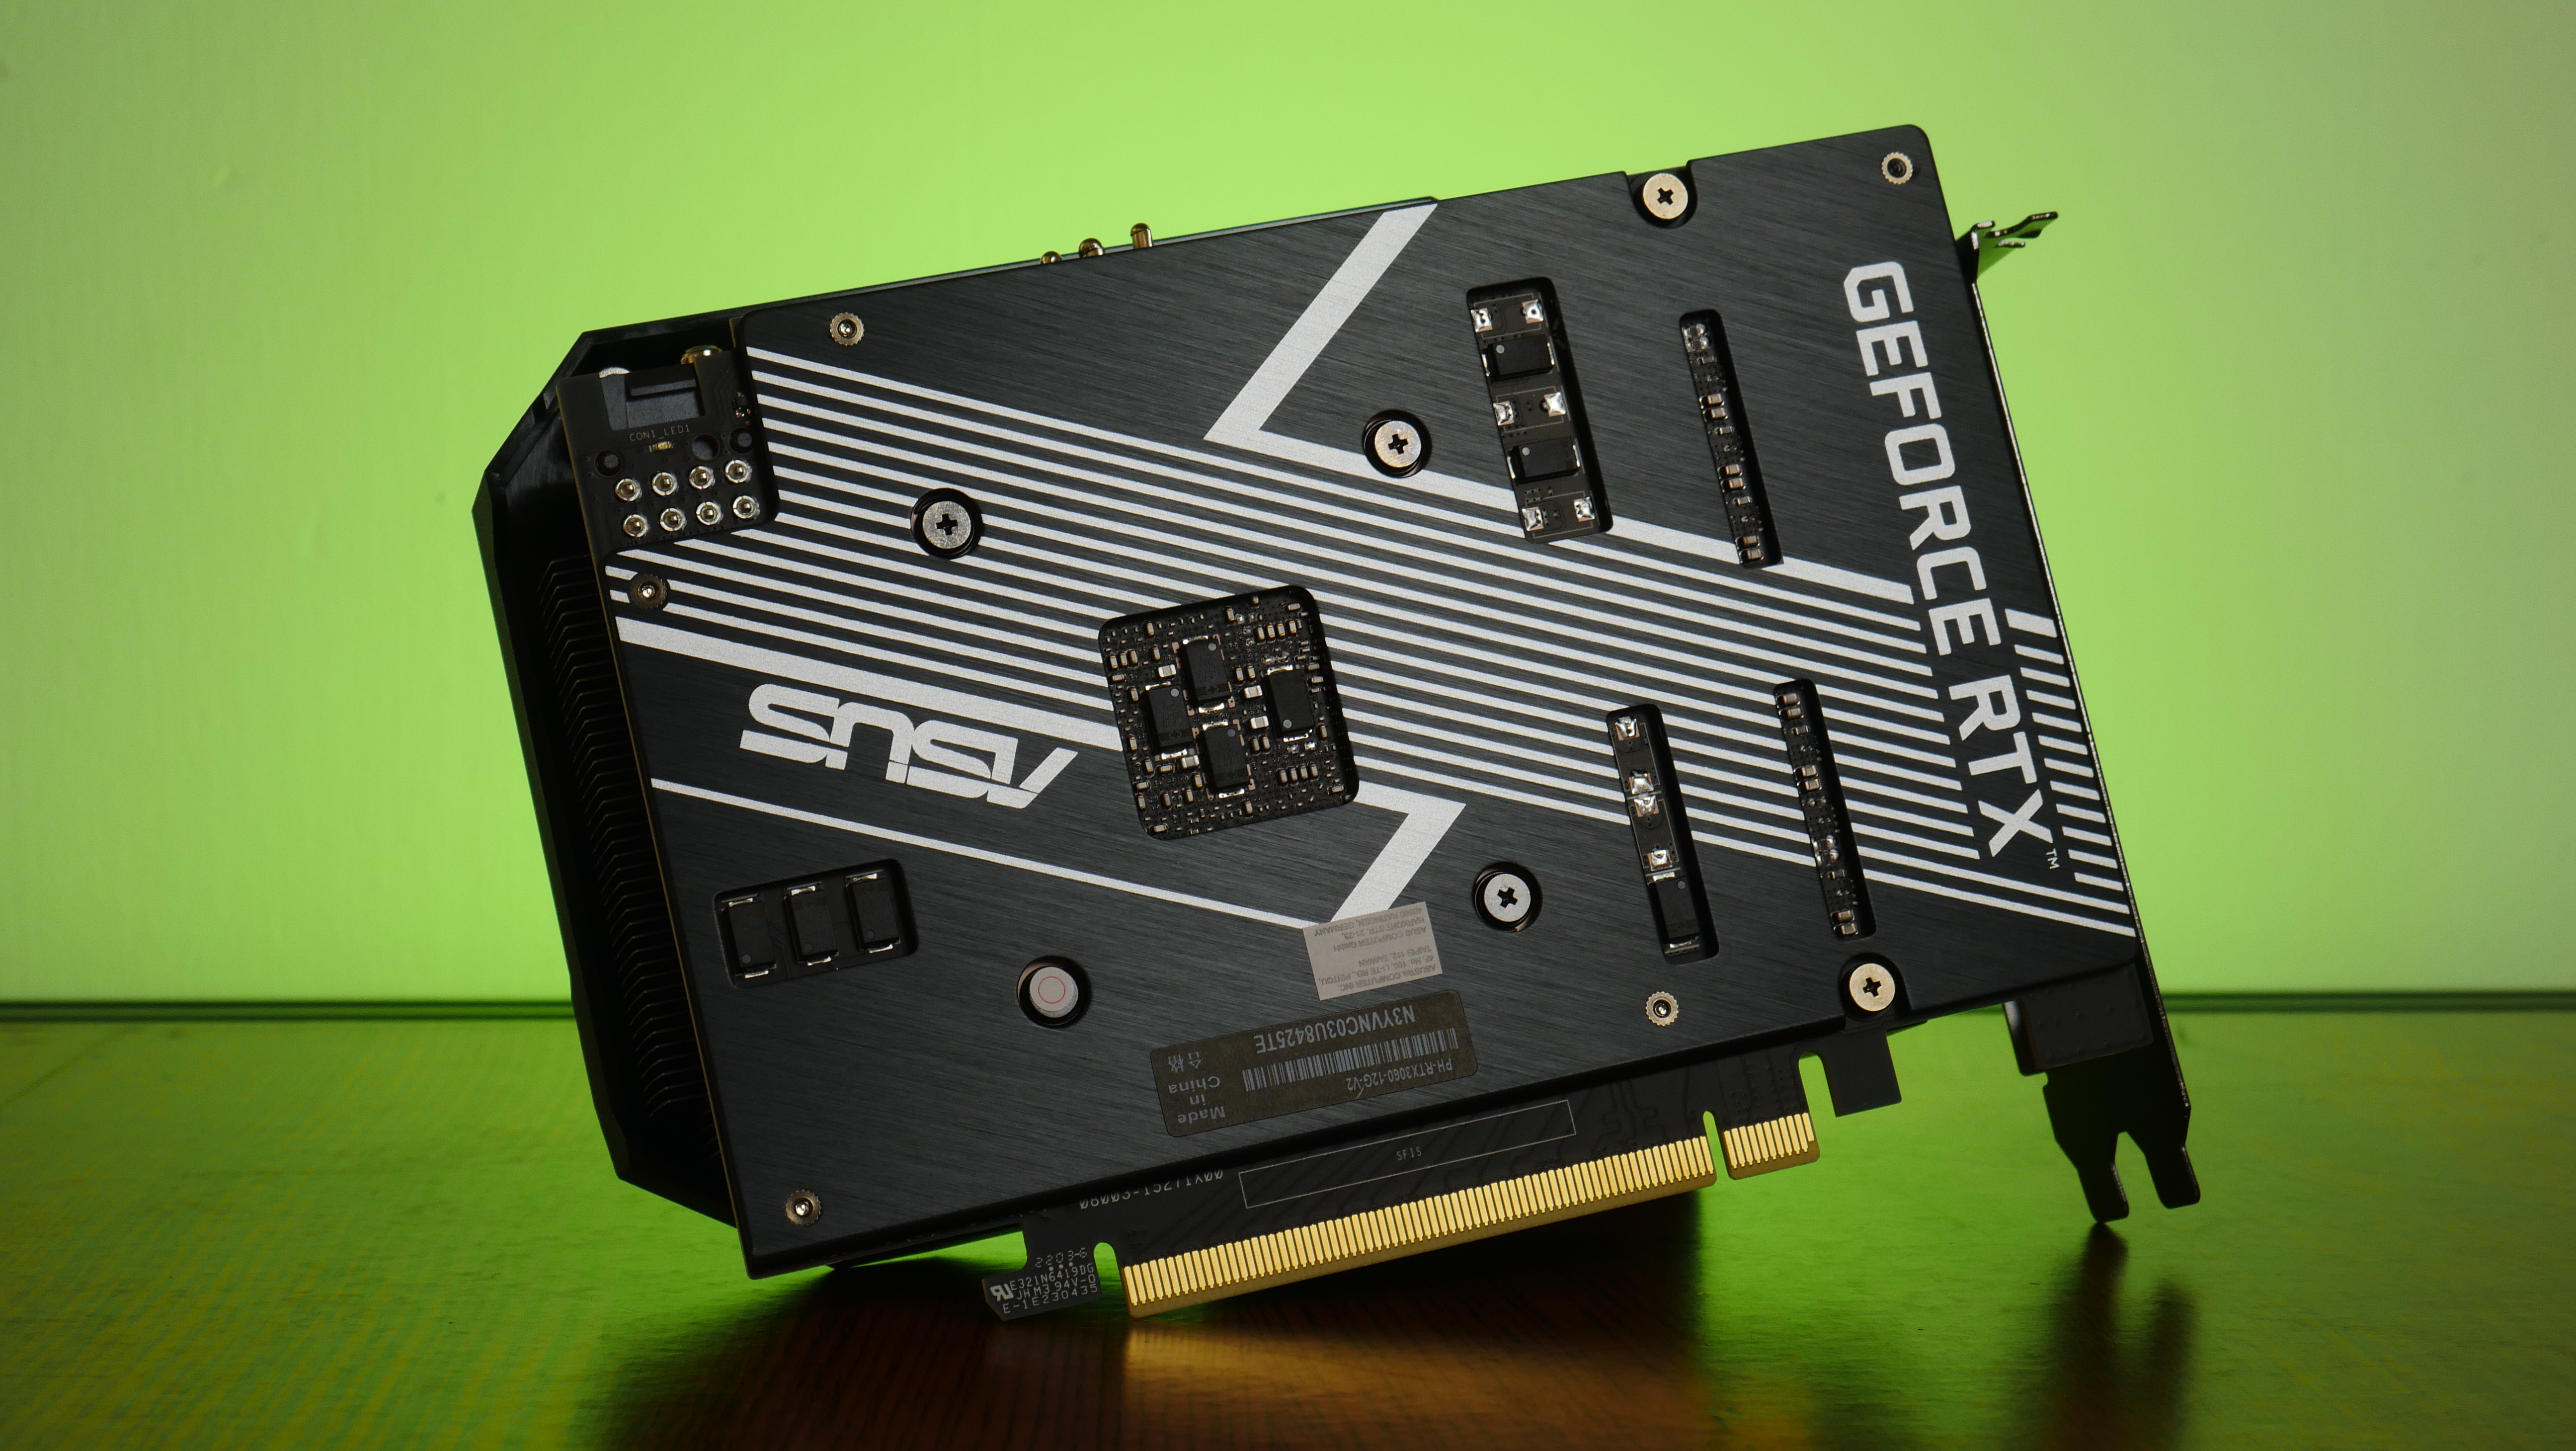 Review: ASUS Phoenix GeForce RTX 3060 V2 12GB GDDR6 (LHR) Graphics